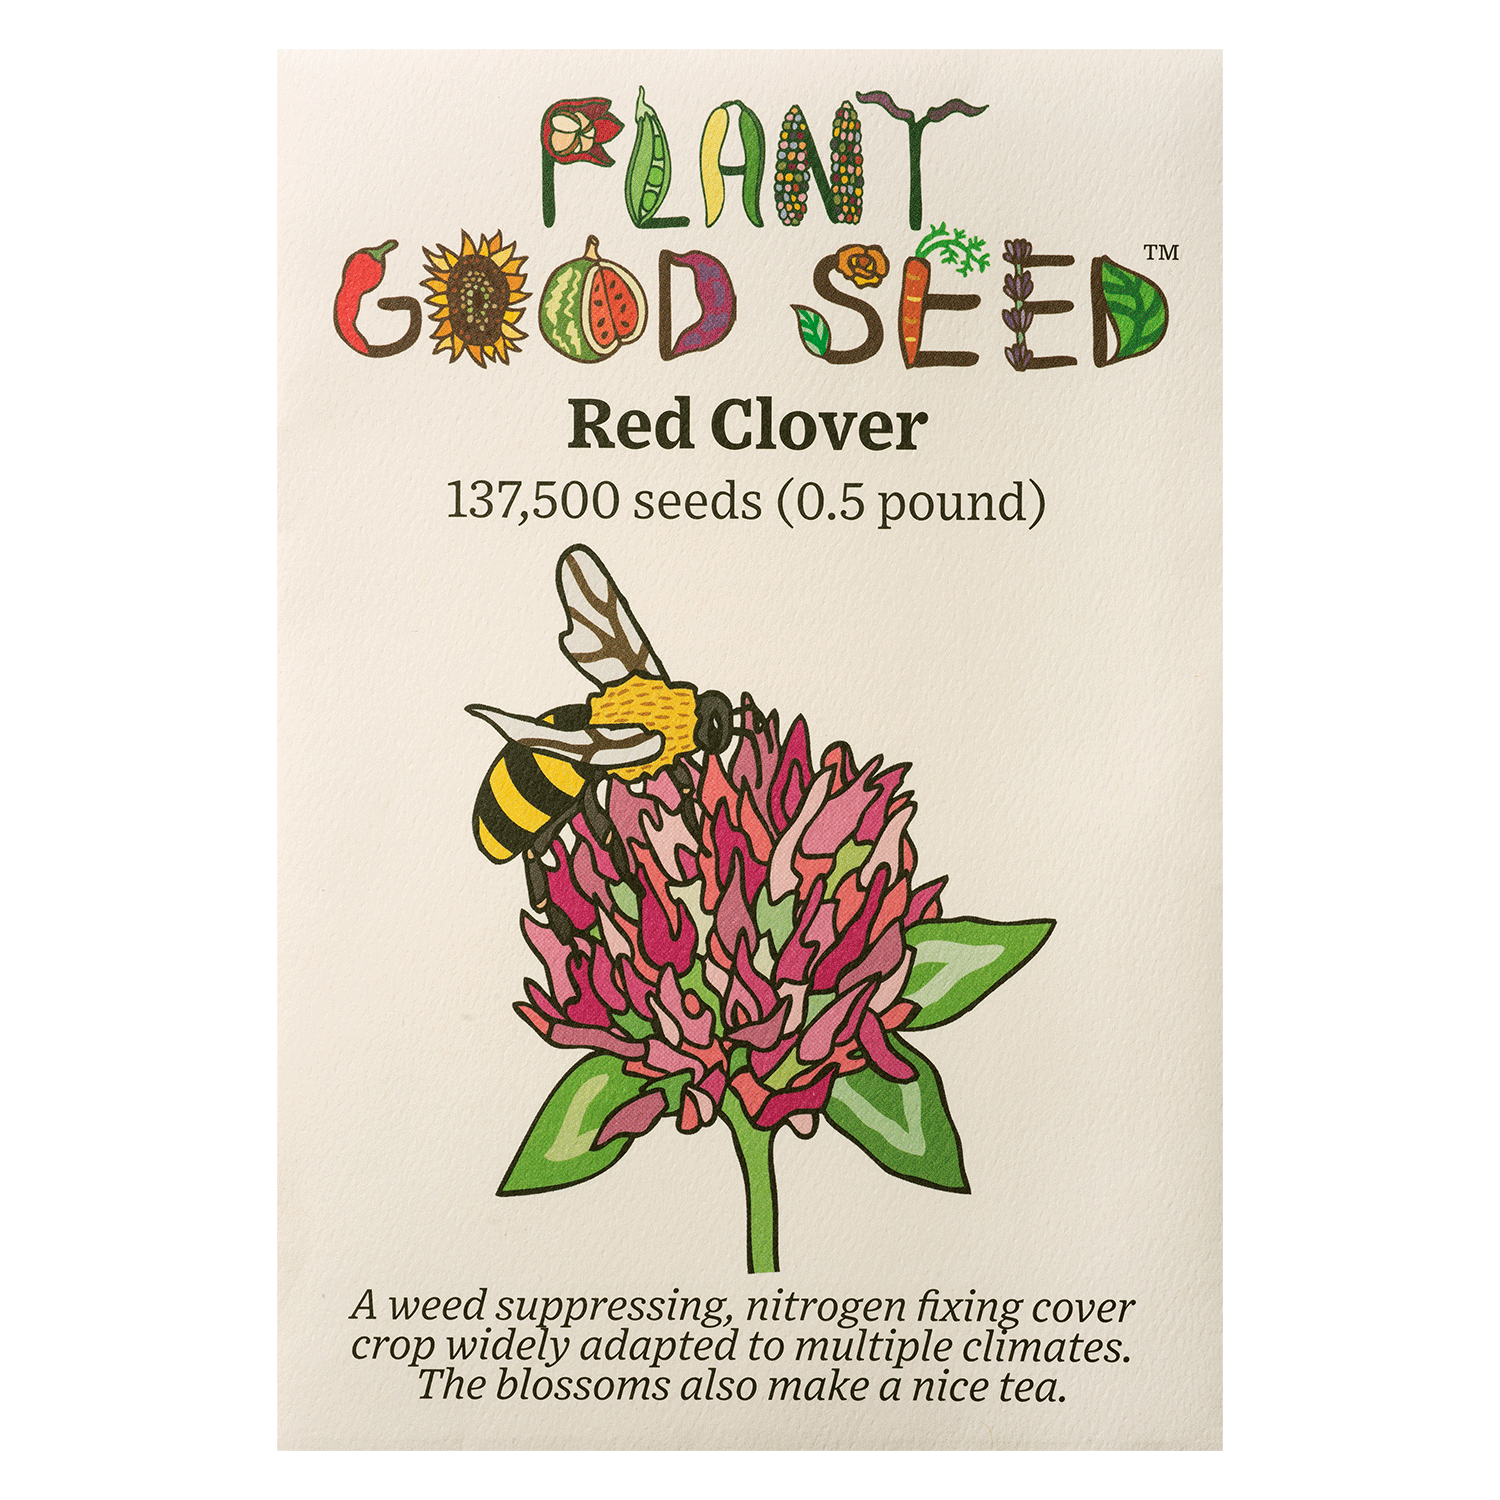 Peshawar Poppy Seeds - The Plant Good Seed Company